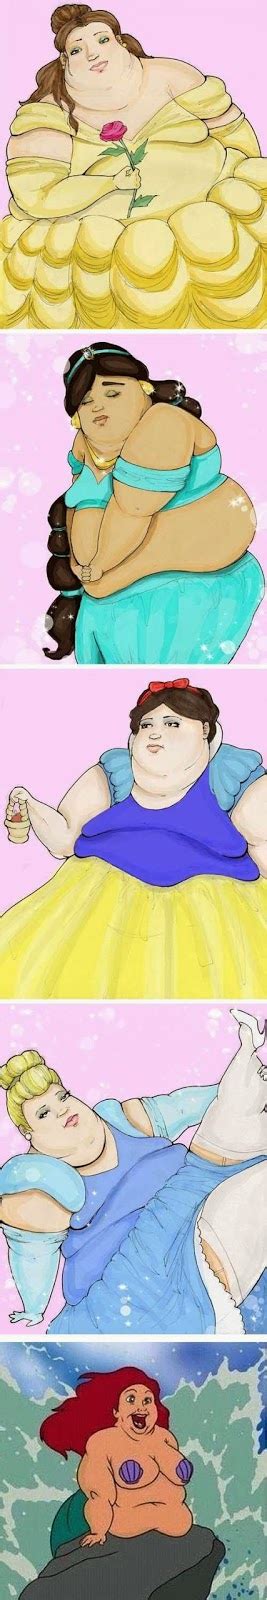 Fat Disney Princesses Cartoons ~ Silly Bunt